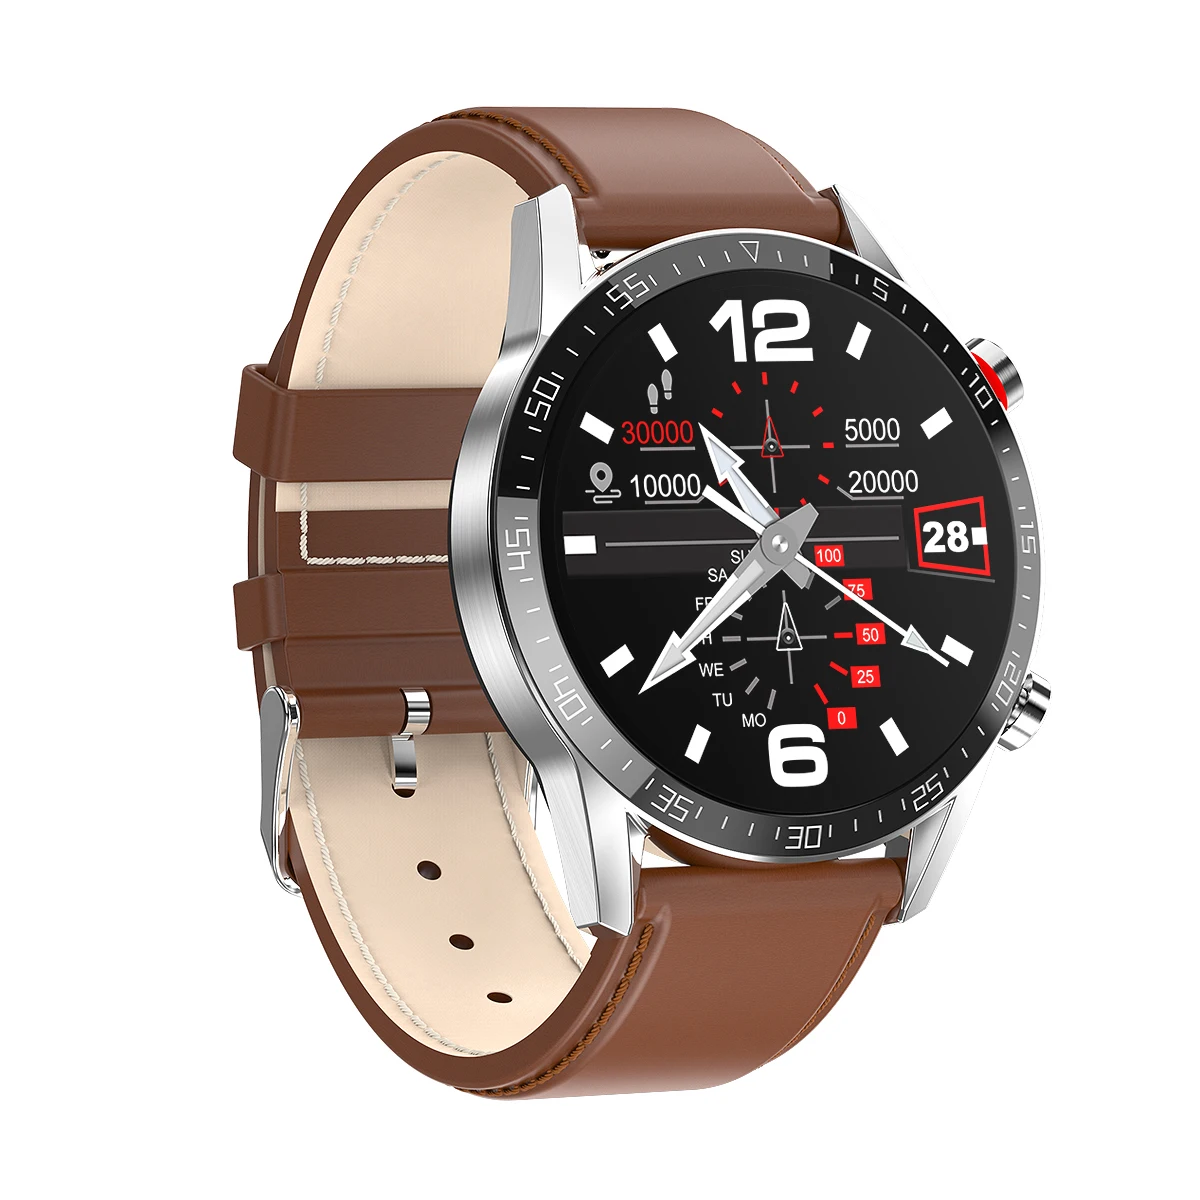 

2021 New L13 Smart Watch IP68 Waterproof Pedometer Android Smartwatch L13 ECG BT Calling Smart Watch, White